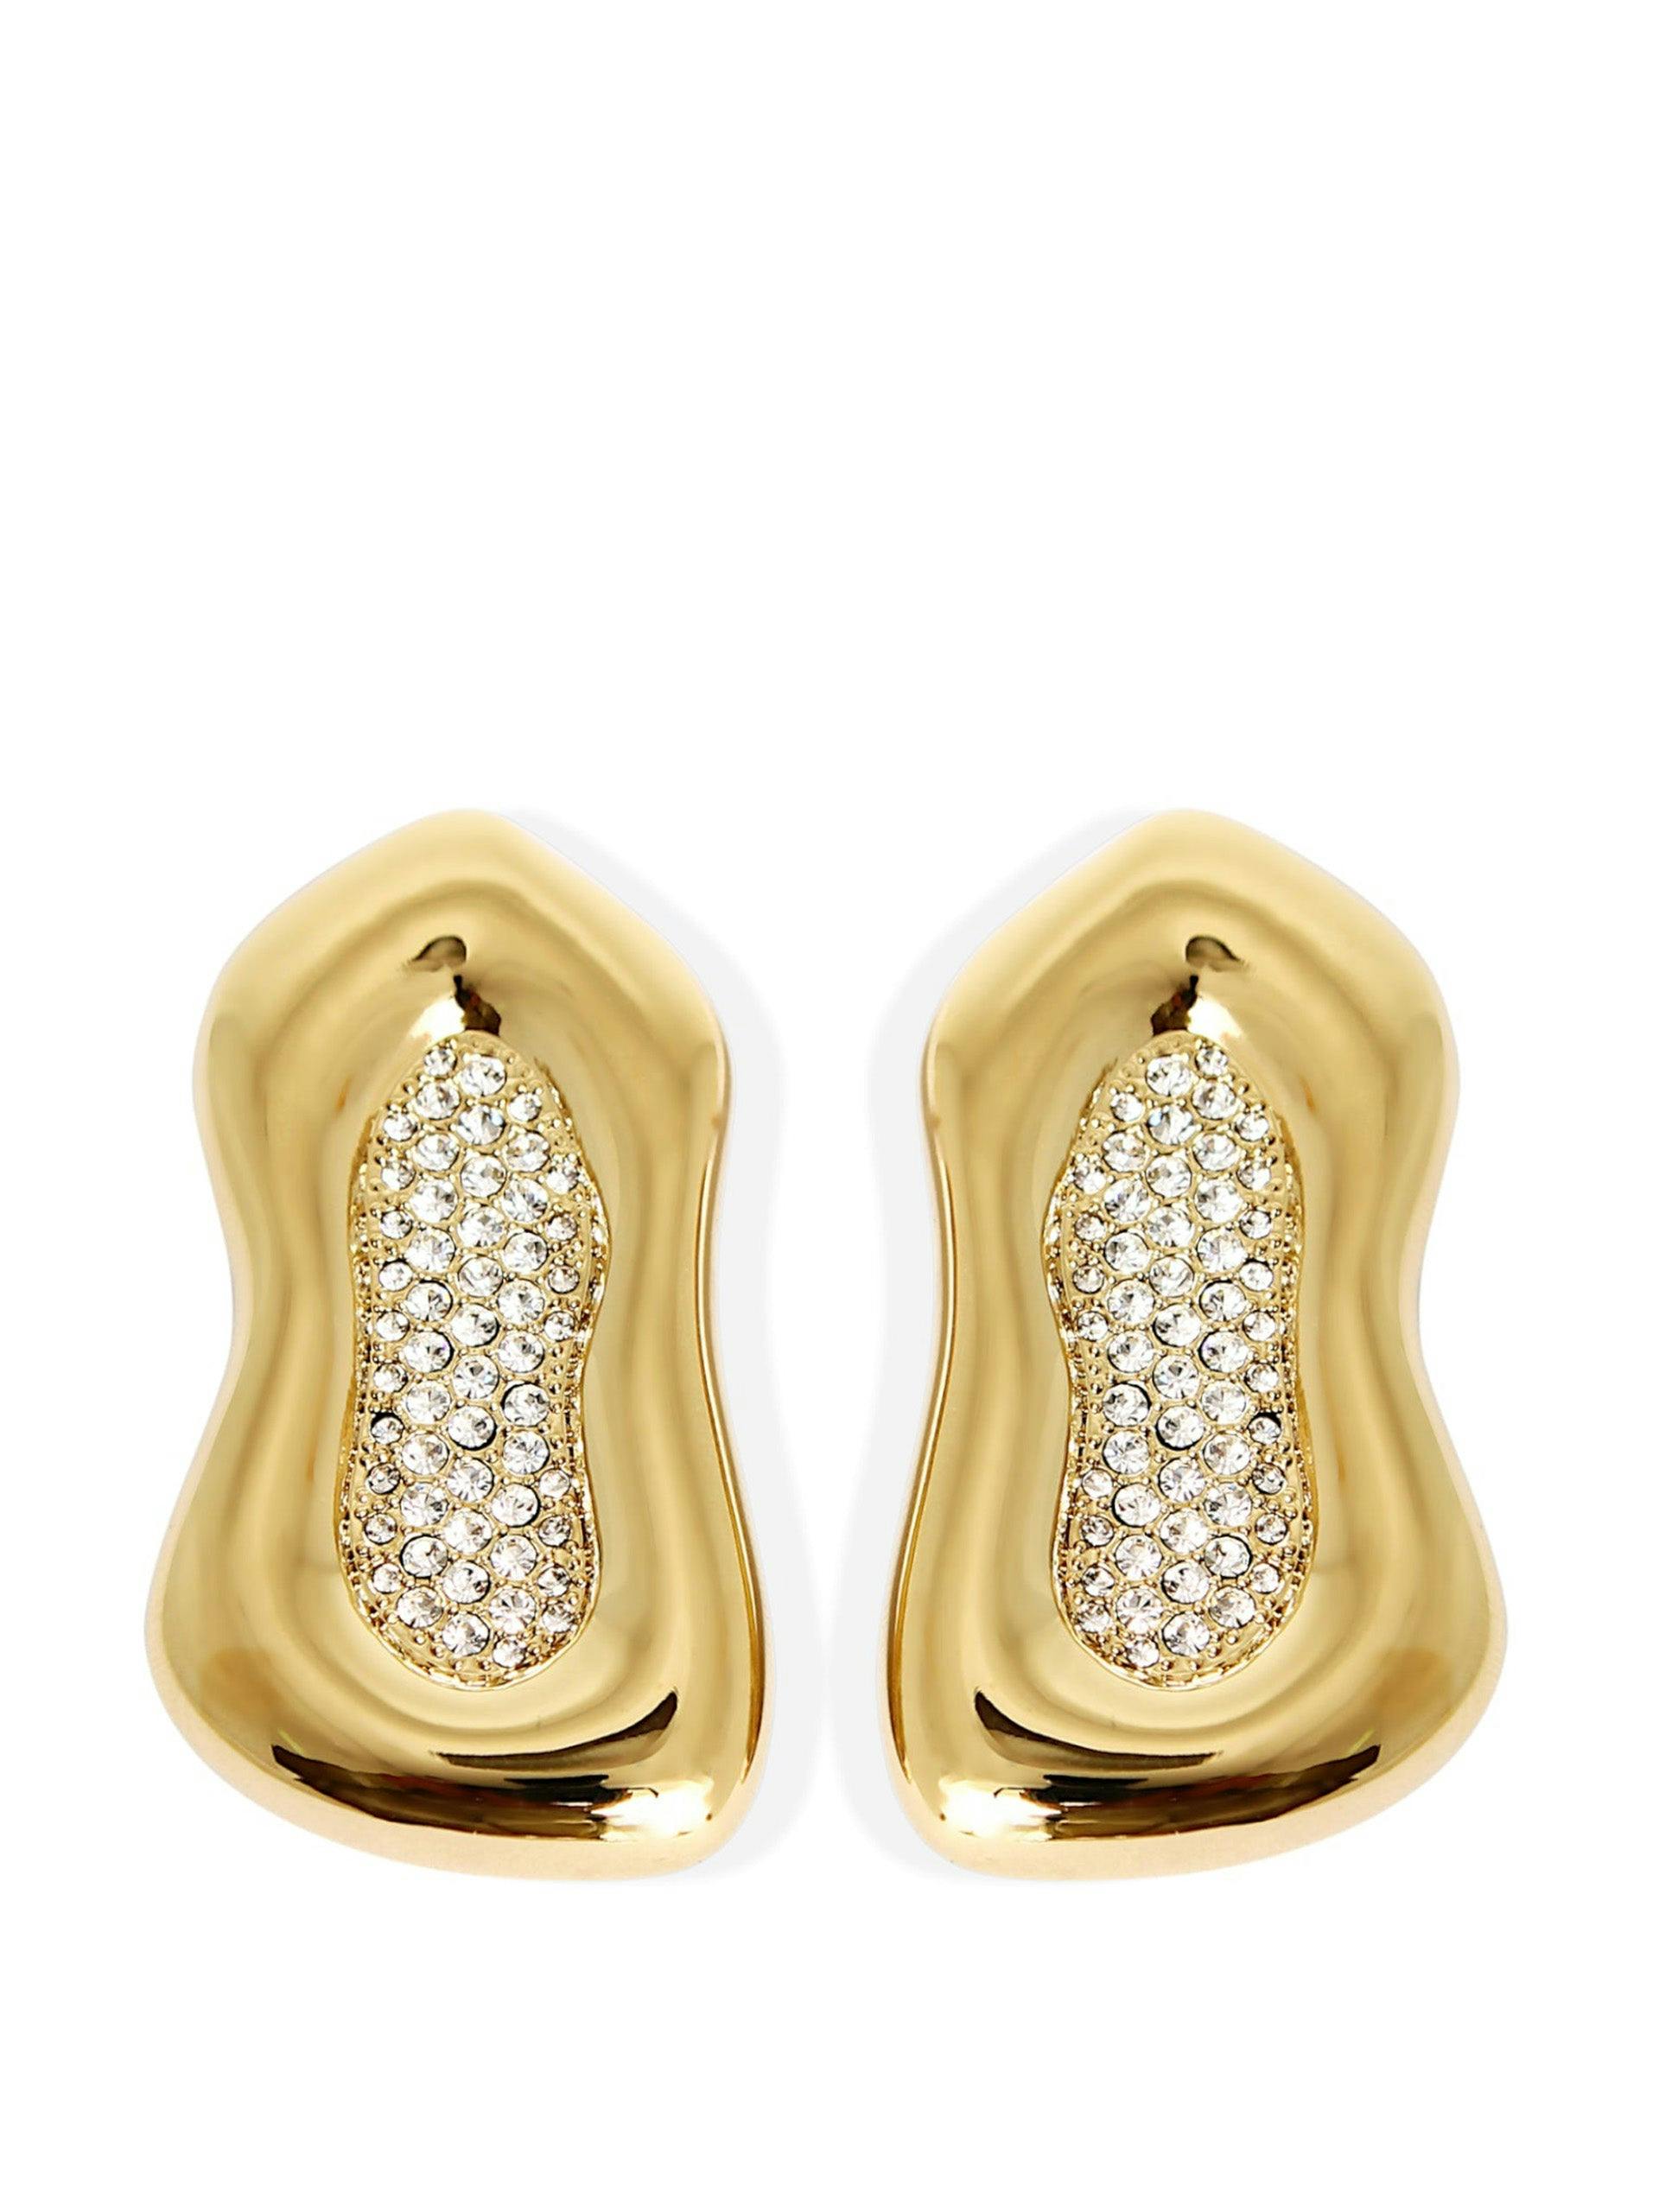 Gold and crystal Hailer earrings